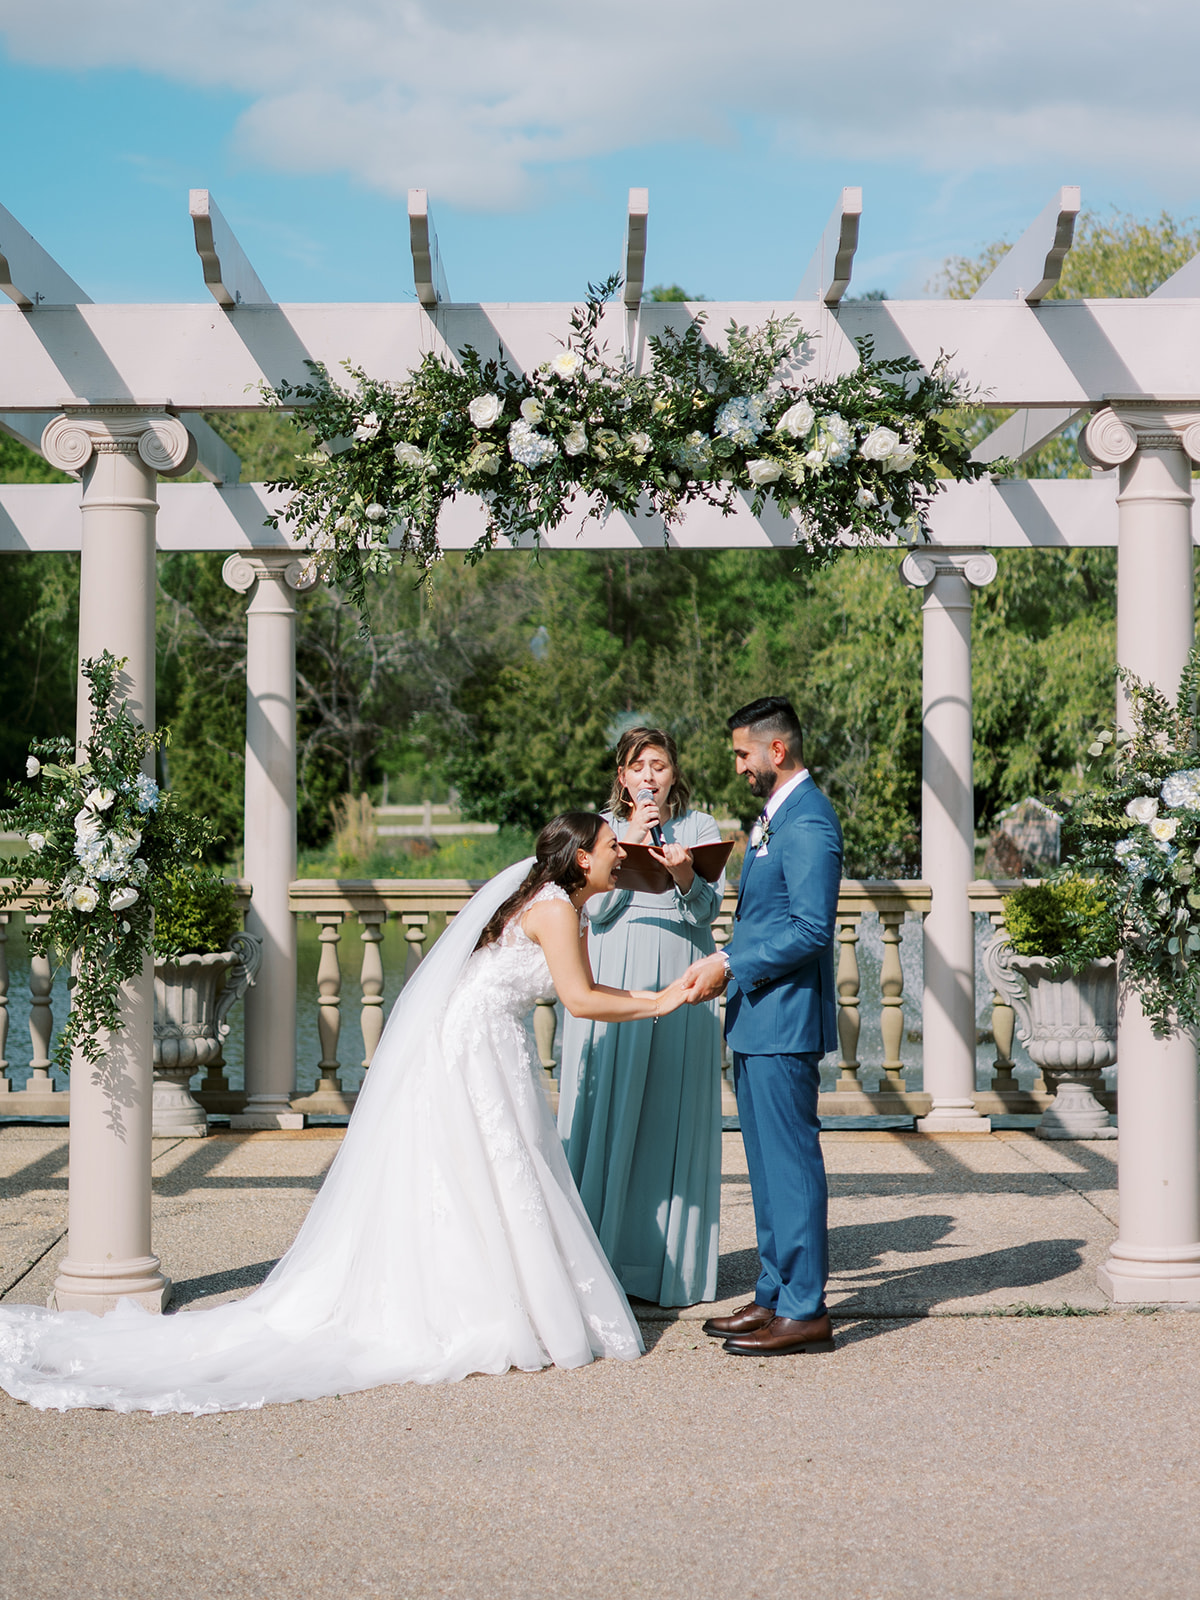 morais vineyard winery virginia bealeton wedding bride and groom putting rings on a line wedding dress blue suit gold 